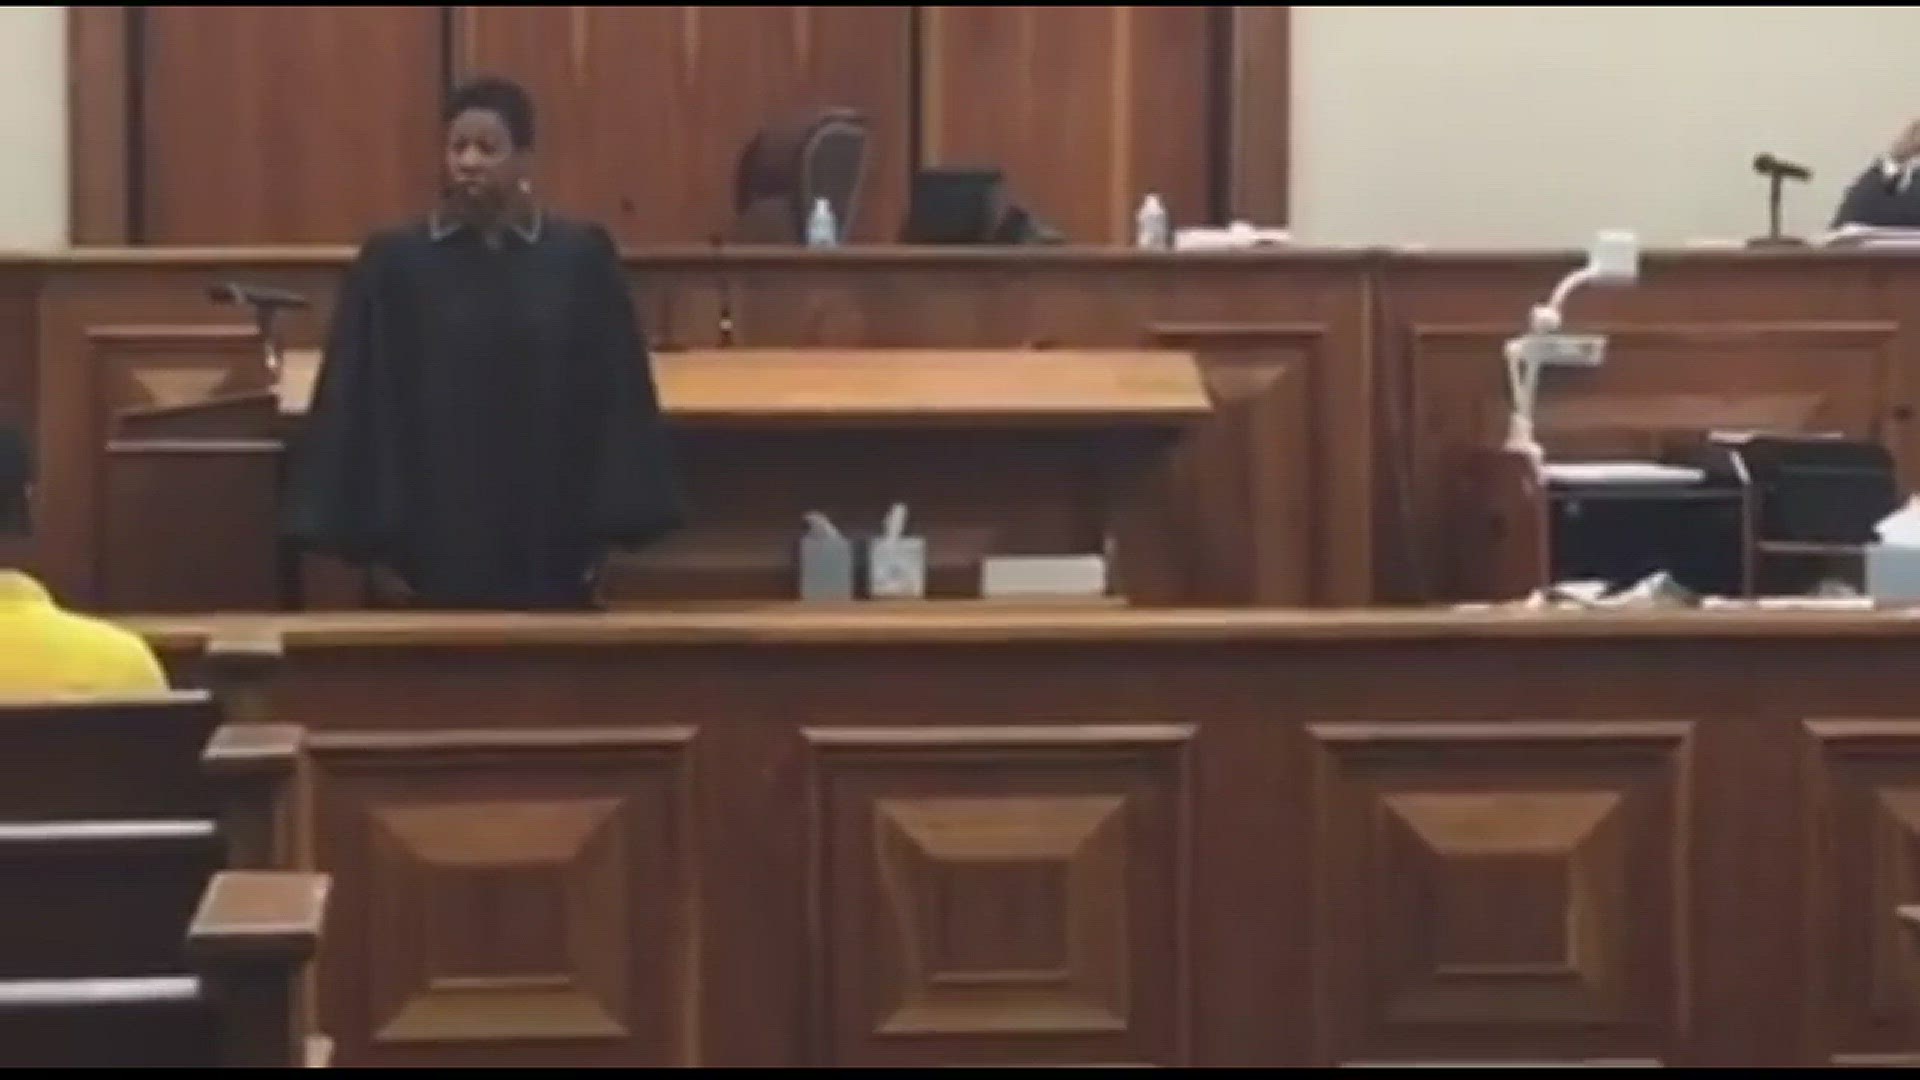 Bibb judge surprised video of her went viral 13wmaz com